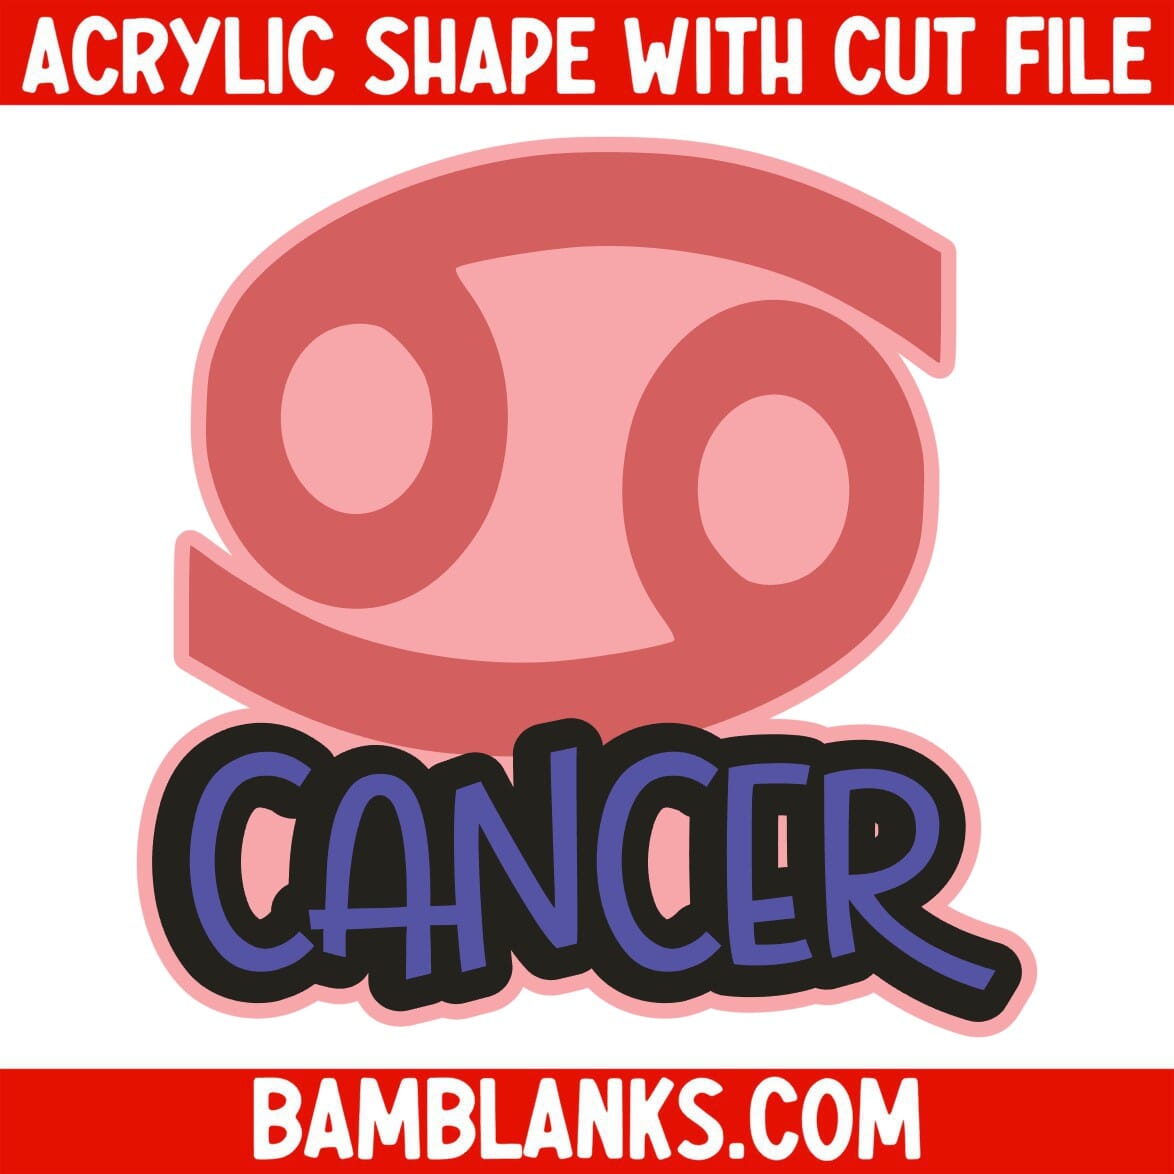 Cancer - Acrylic Shape #1216